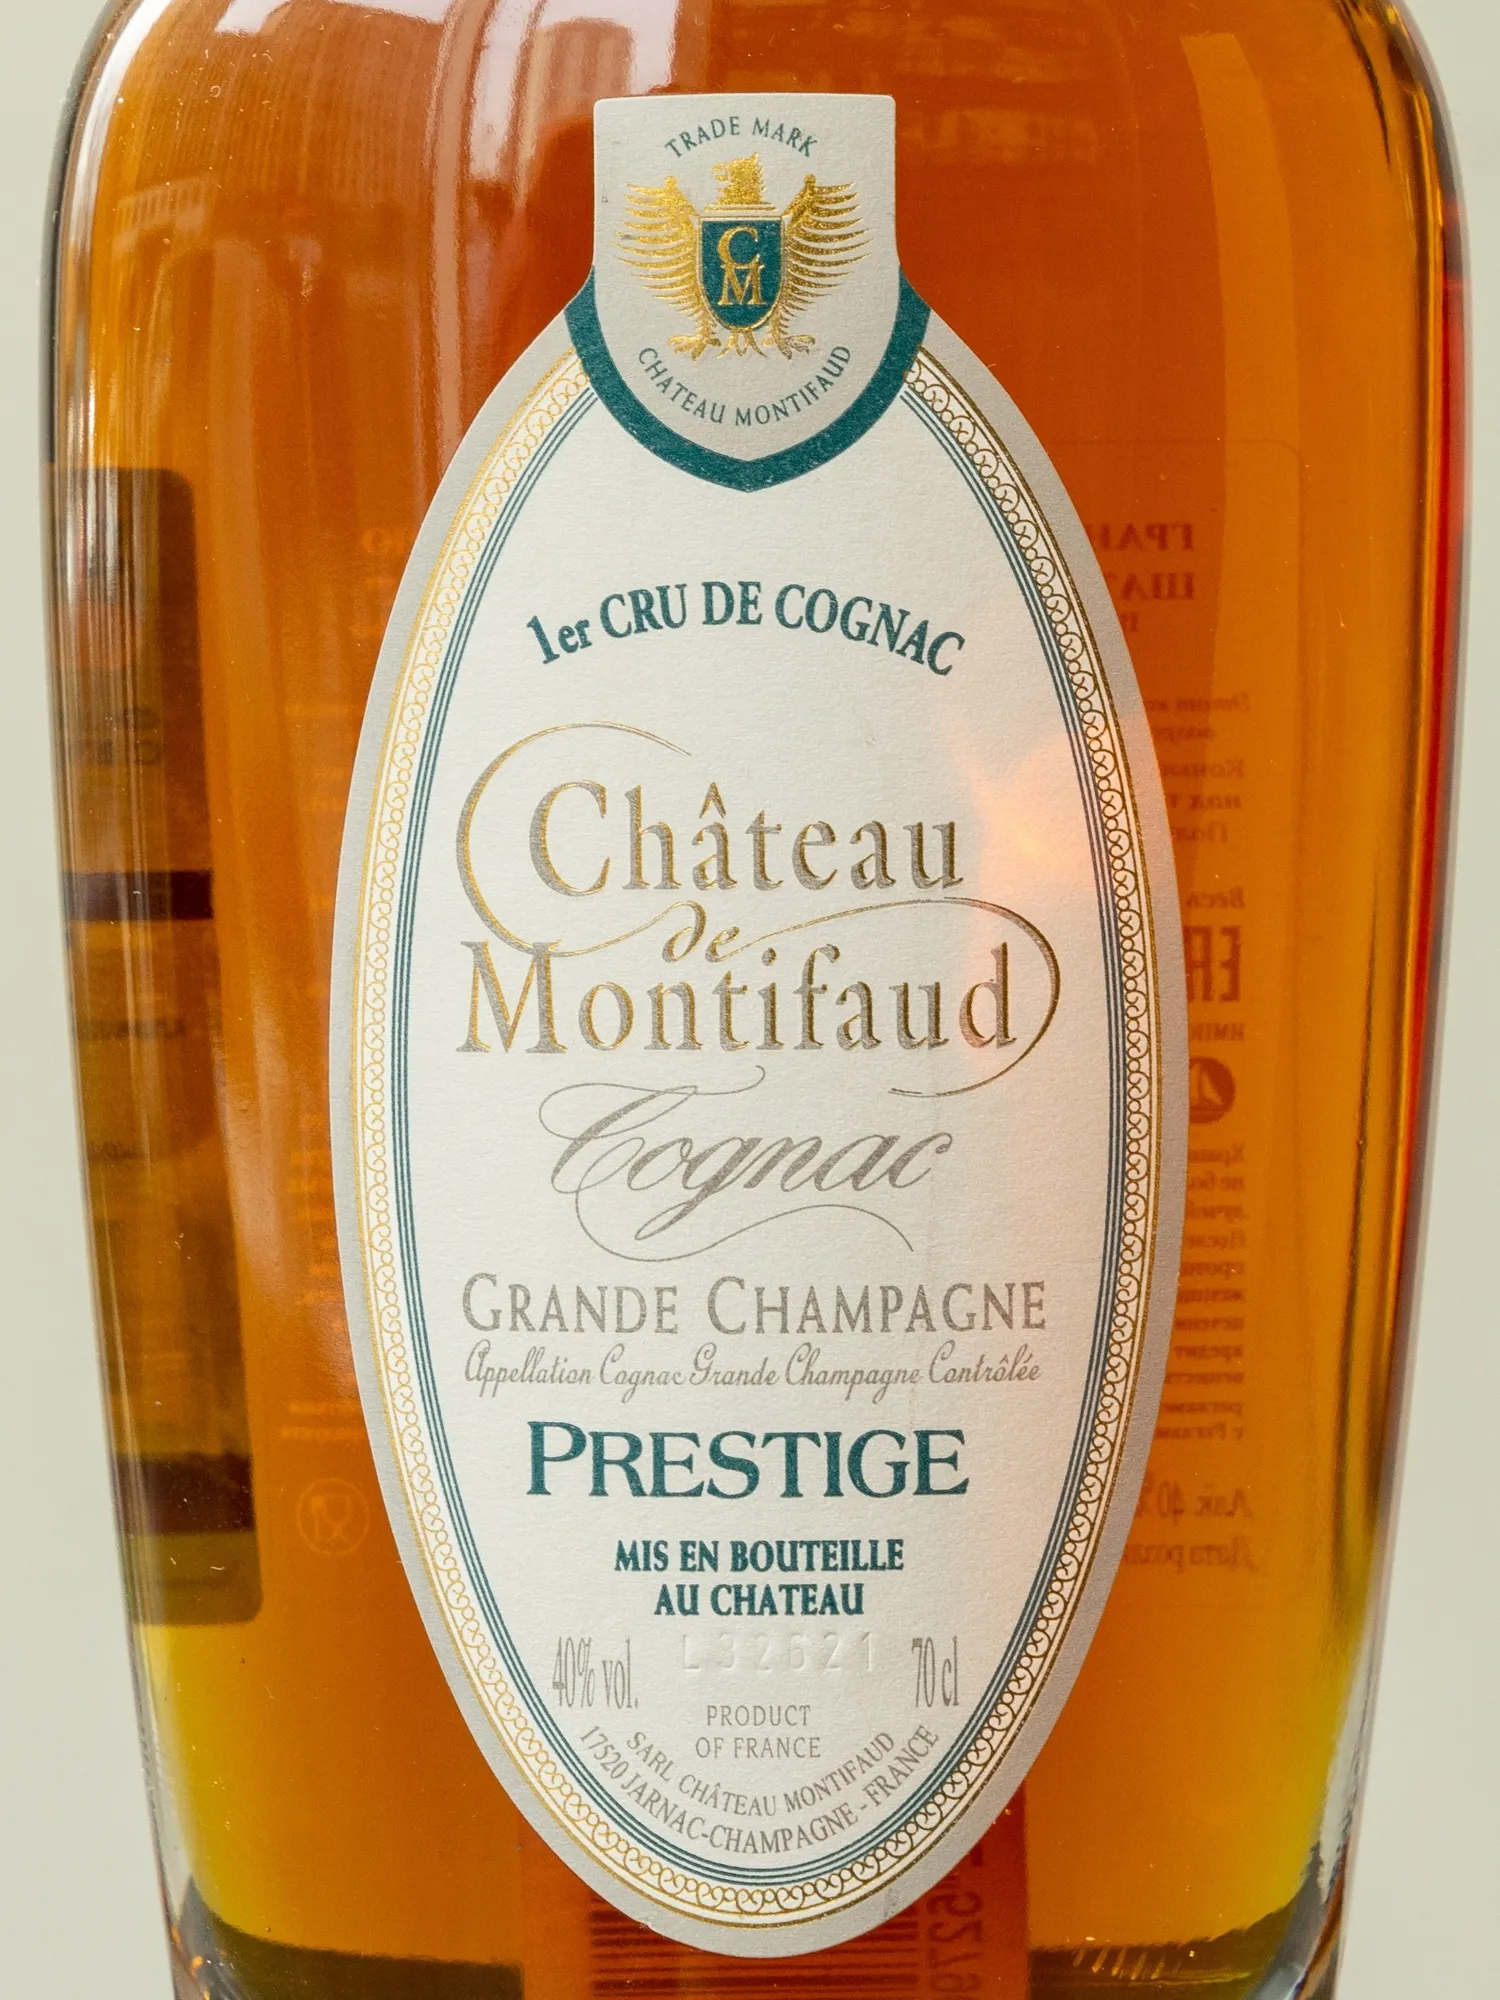 Этикетка Chateau de Montifaud Prestige Grande Champagne